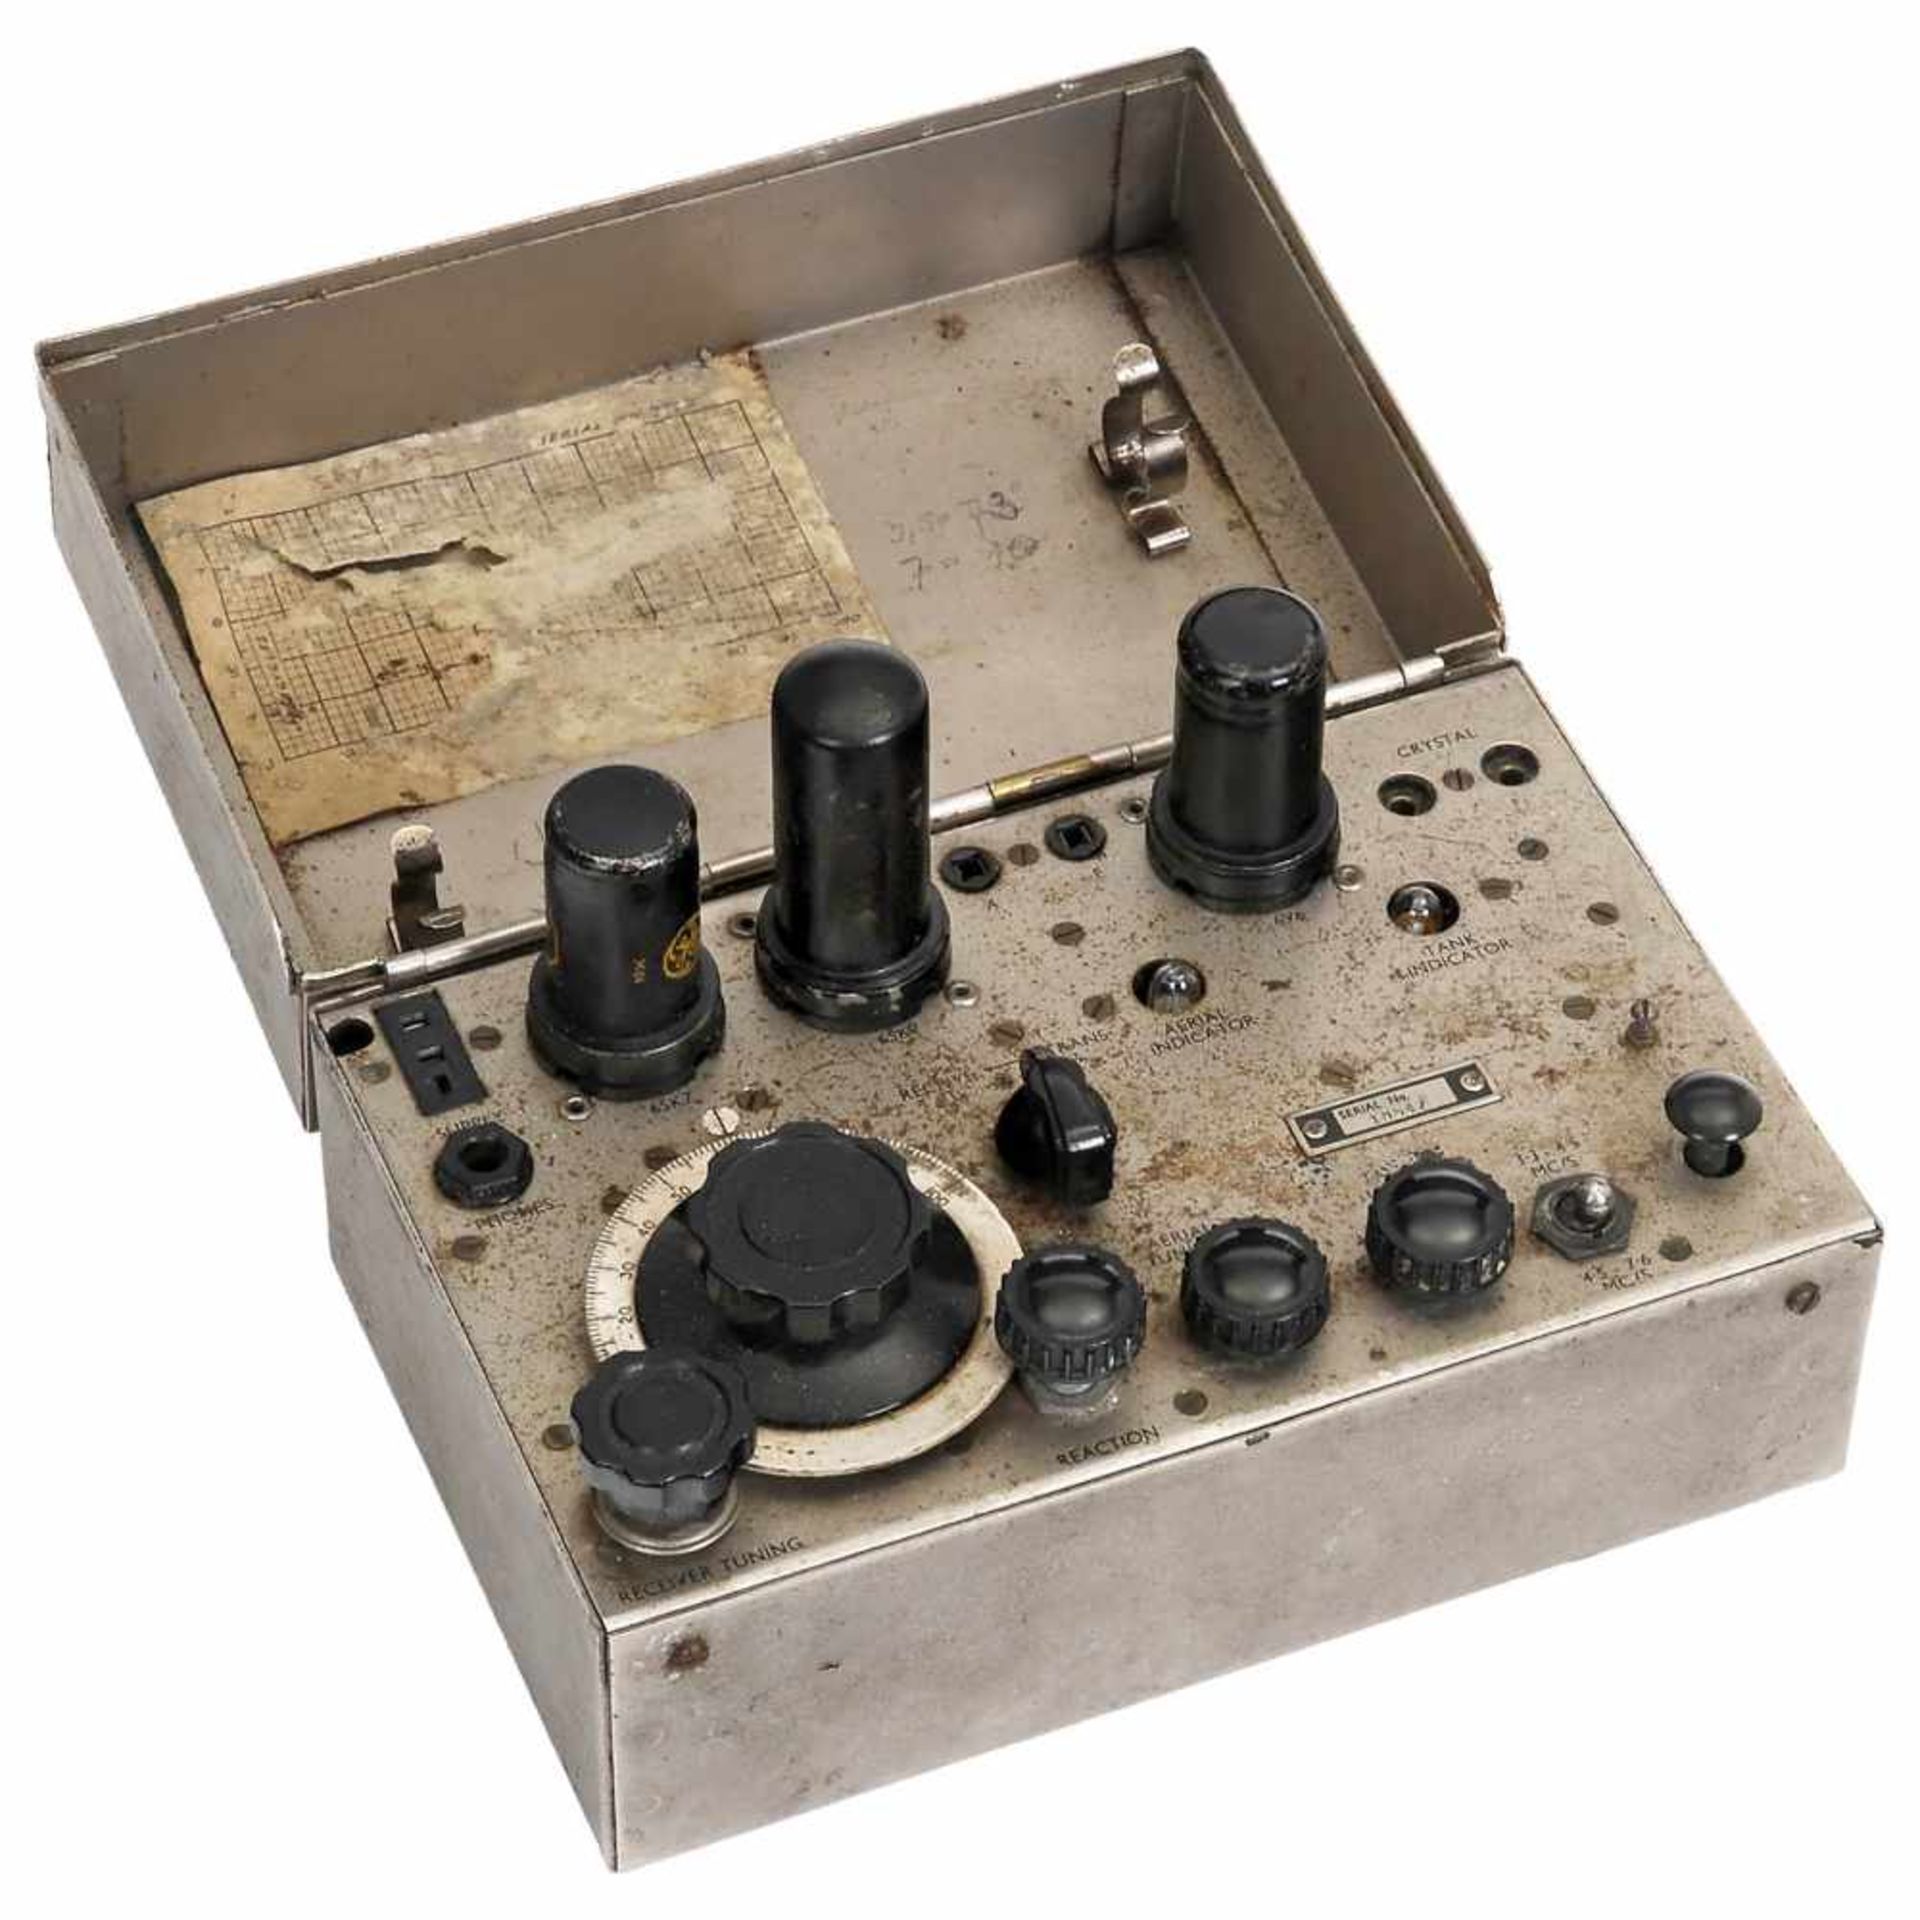 Whaddon Mk VII - Paraset Clandestine Radio, c. 1942No. 10547, a British transceiver developed for